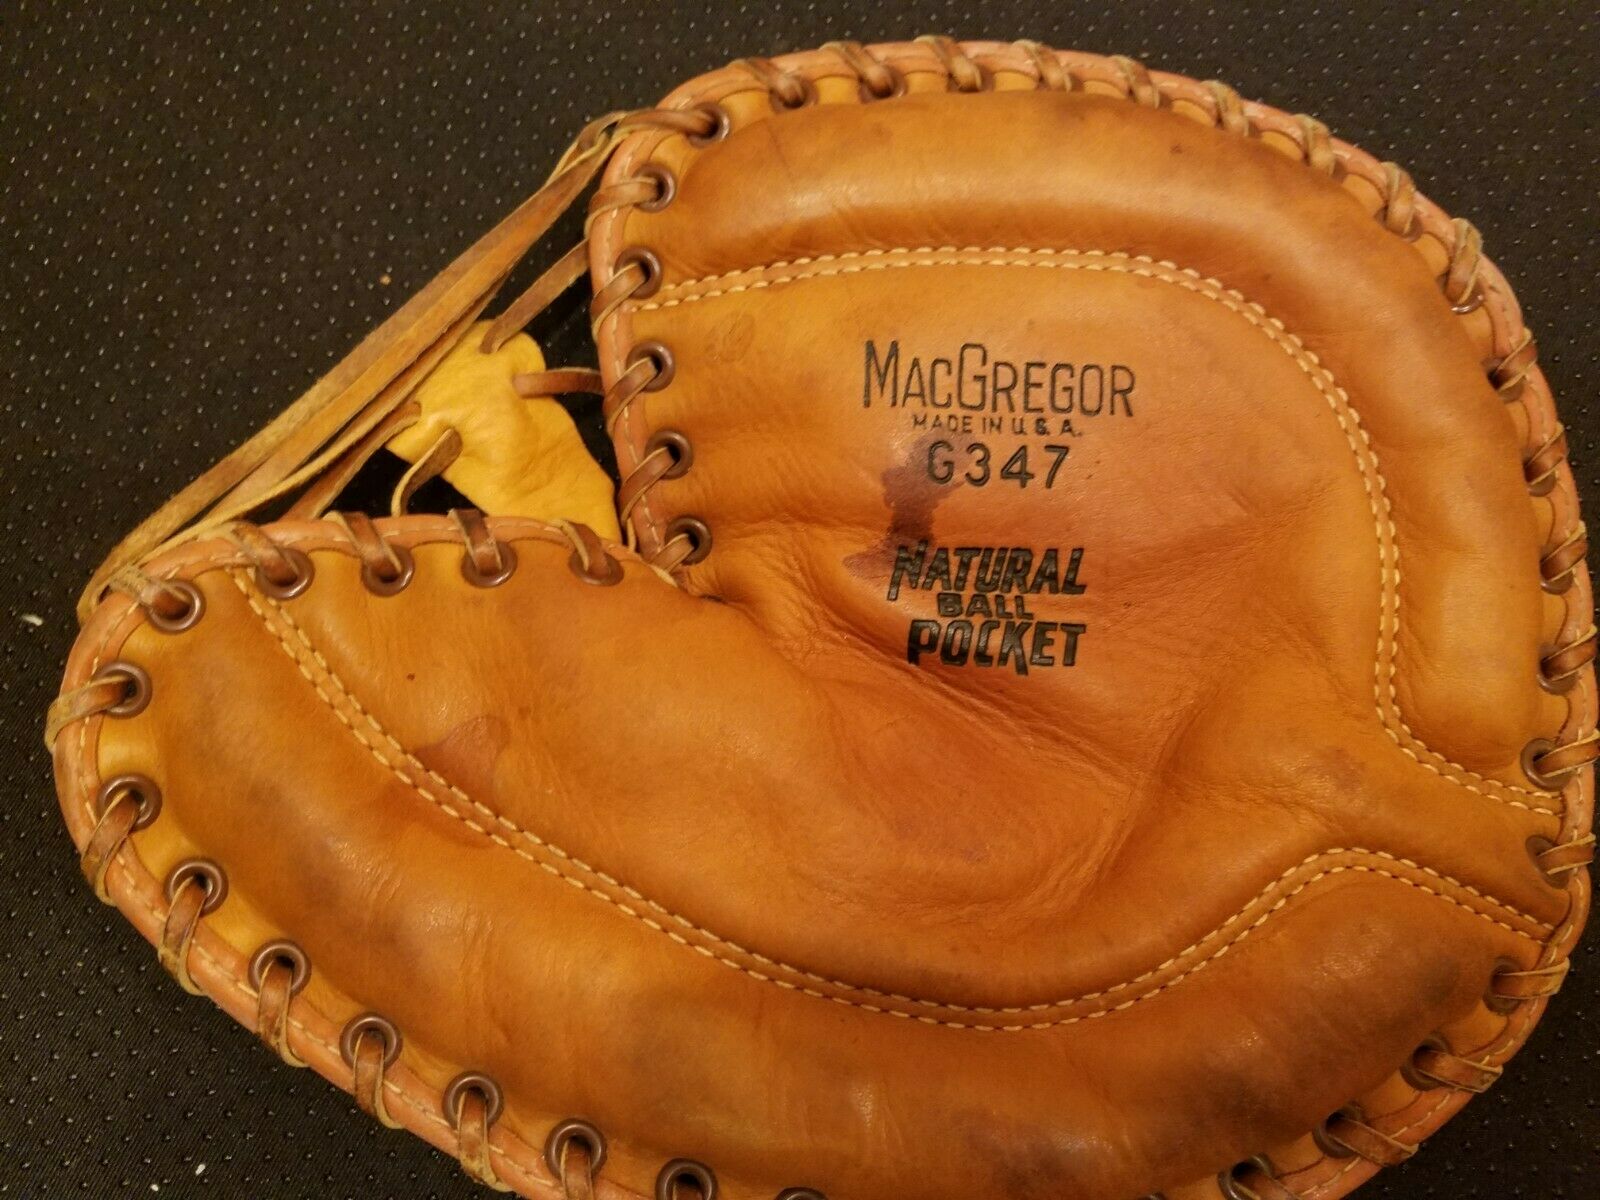 Macgregor Vintage Softball Glove Natural Ball Pckt G347 Ex Cond-blck Flt On Back